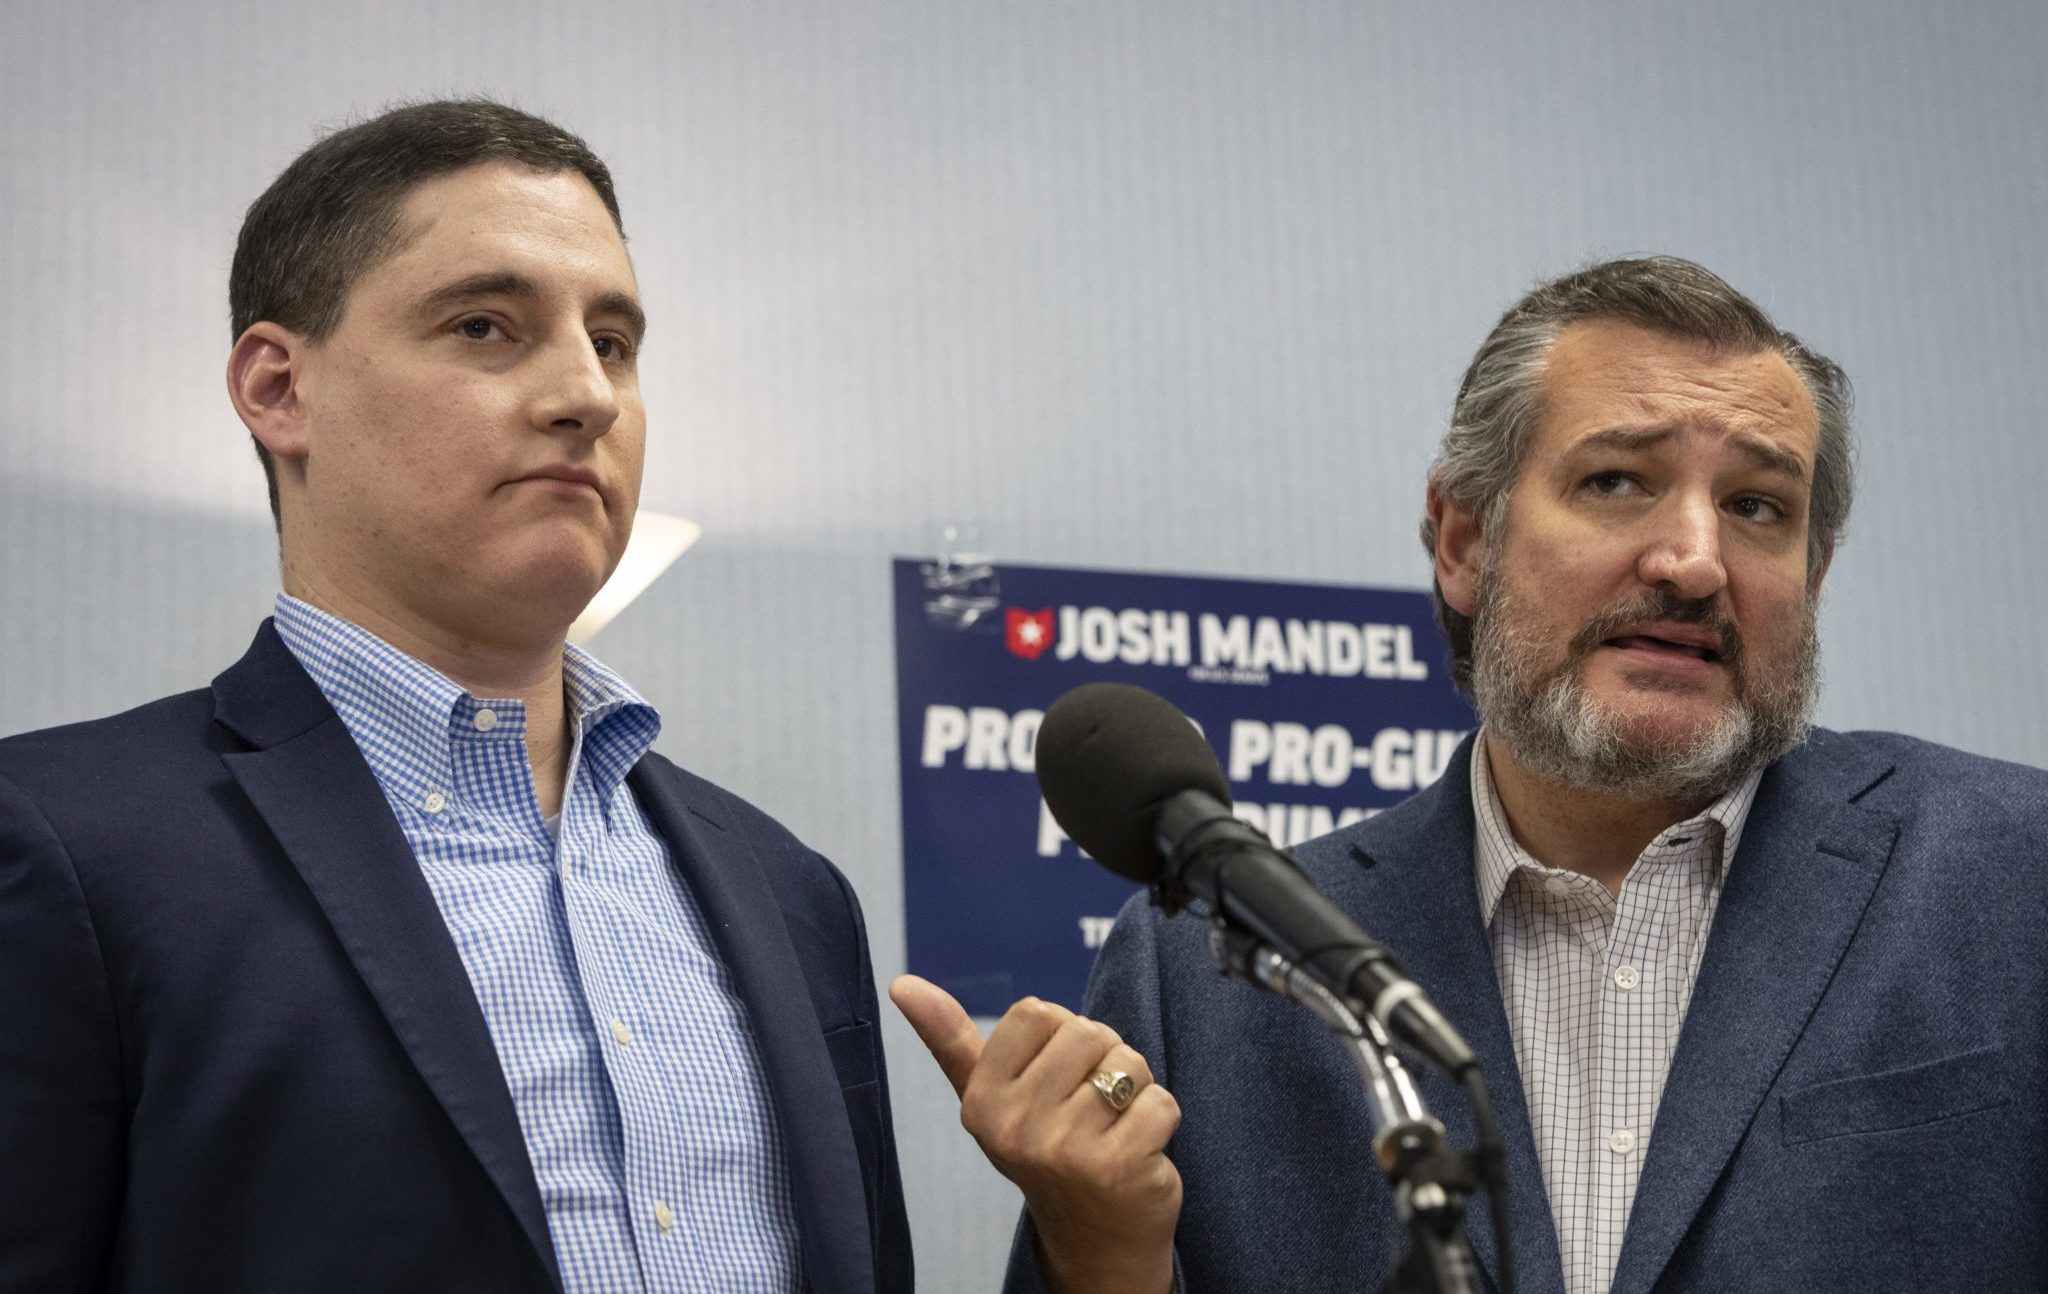 Ted Cruz Joins Ohio Senate Candidate Josh Mandel At Campaign Rally